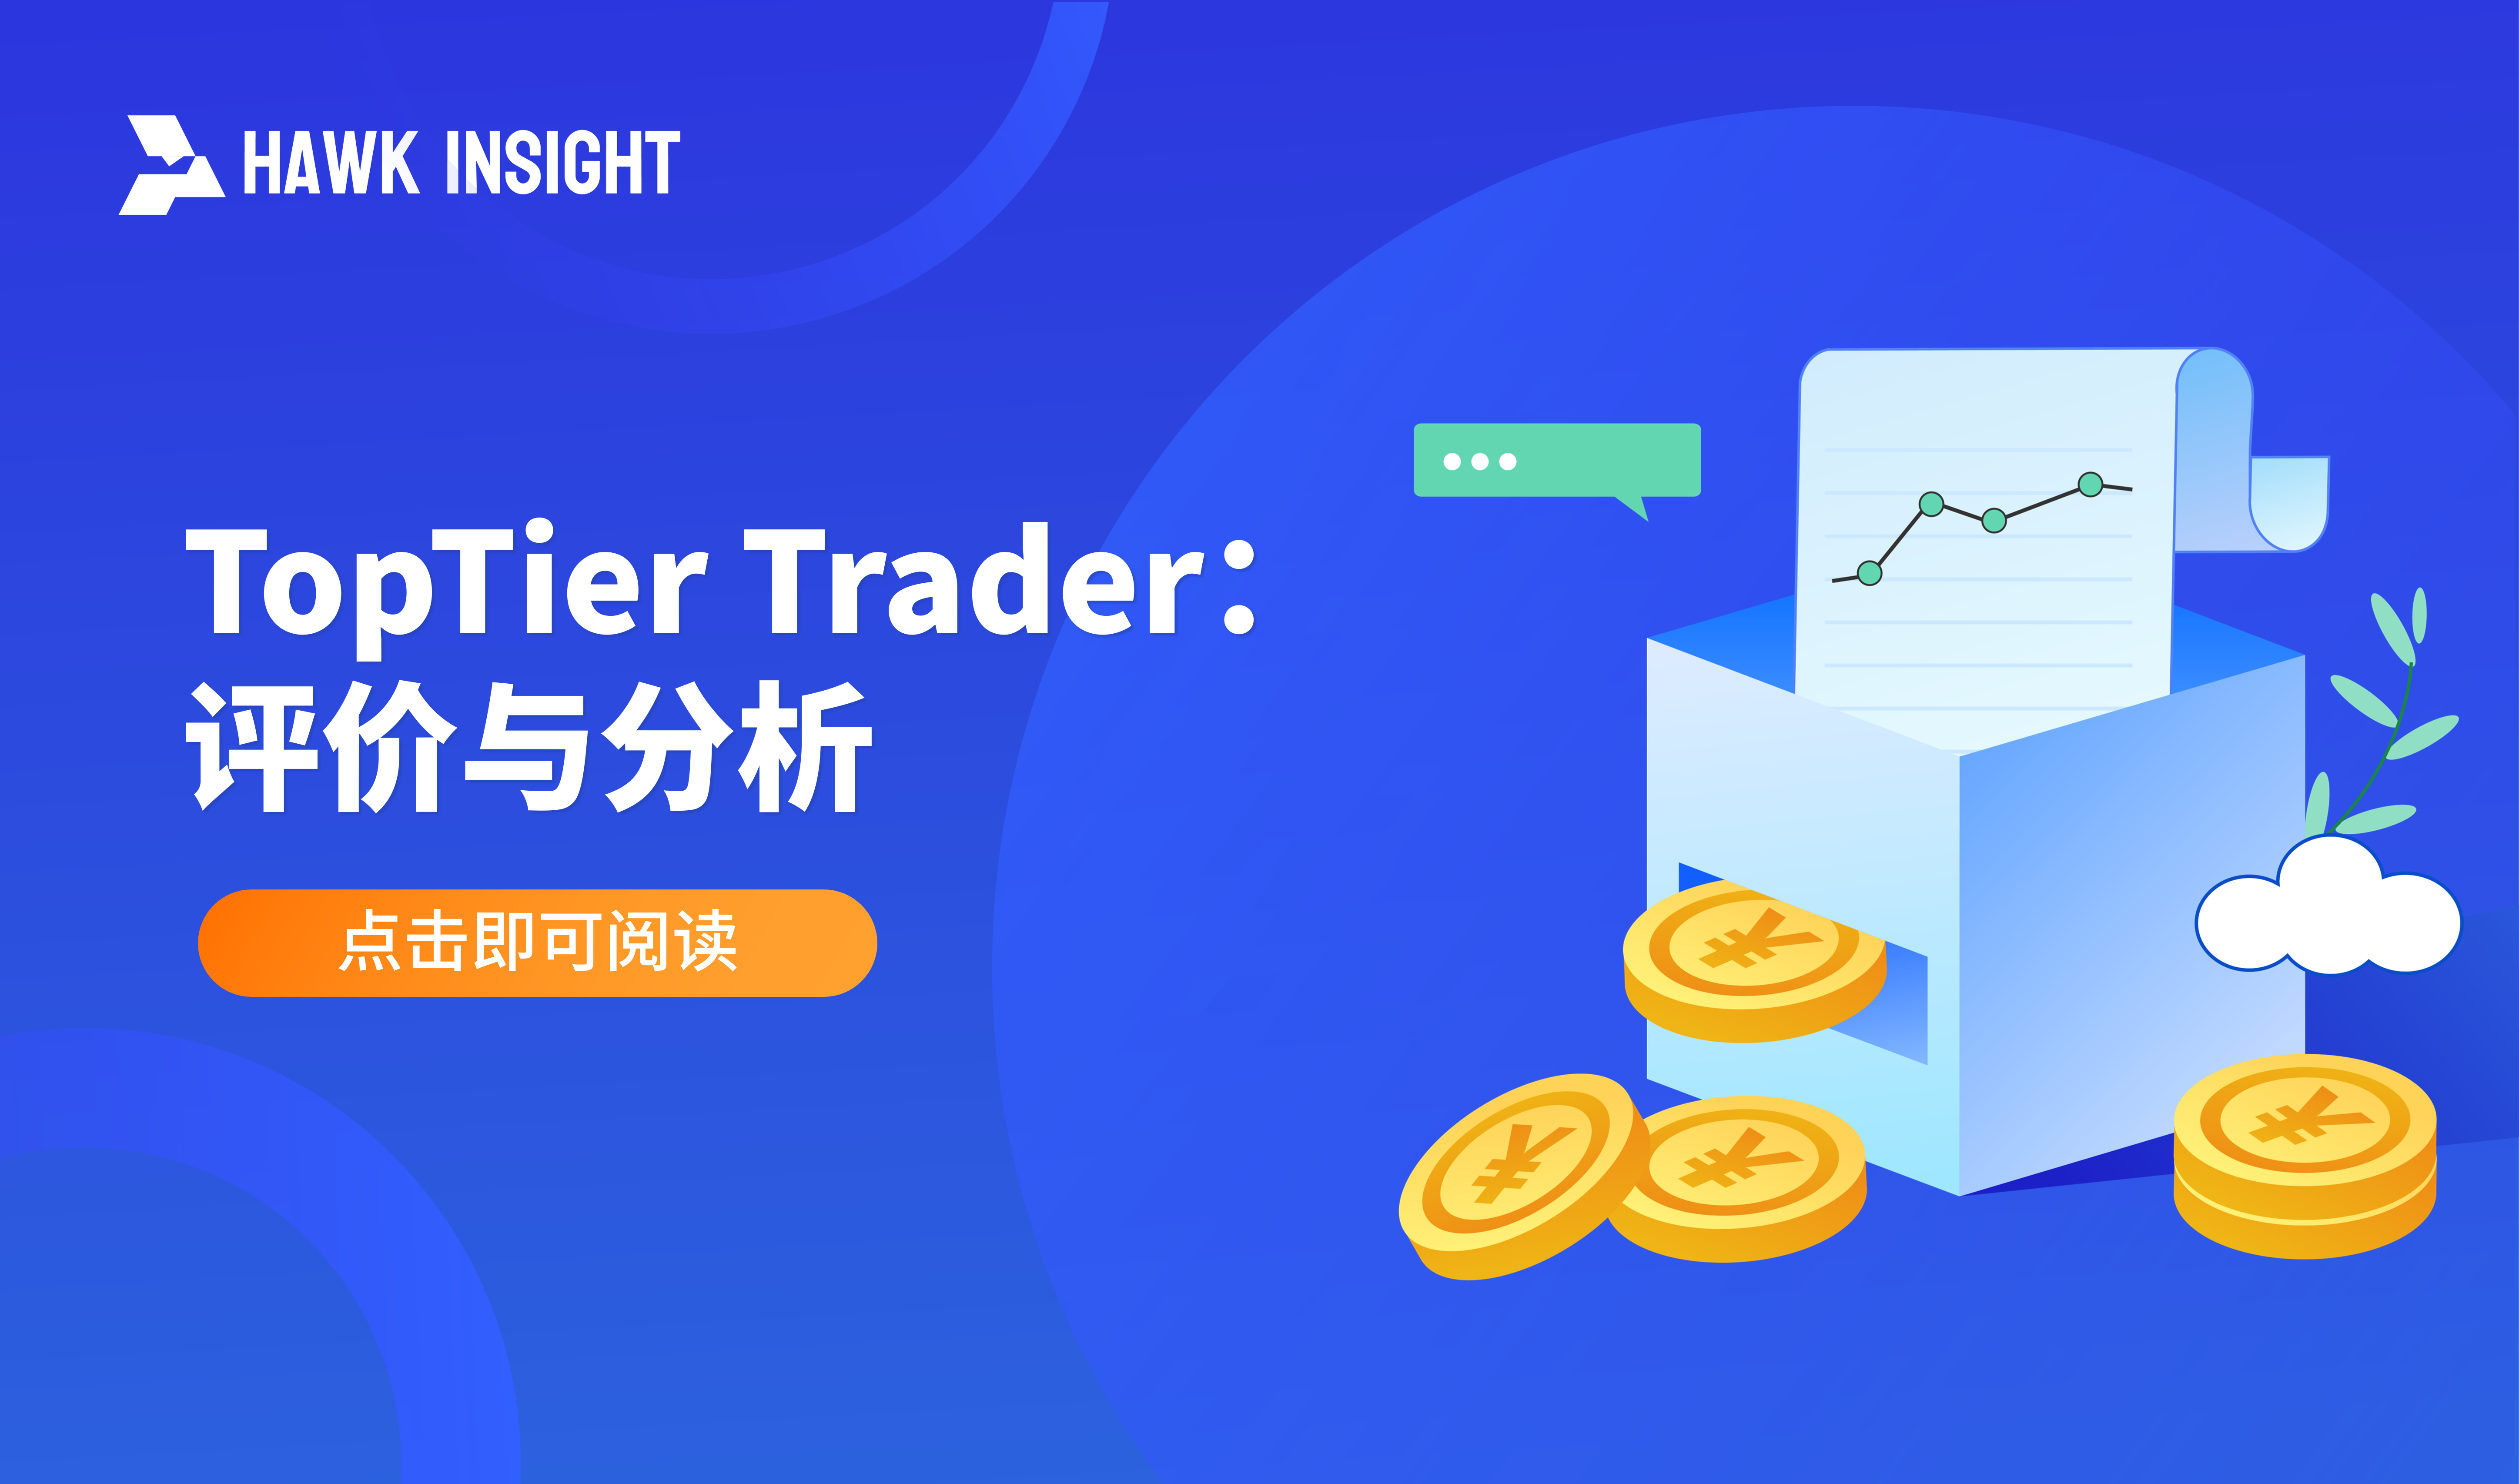 TopTier Trader: 评价与分析